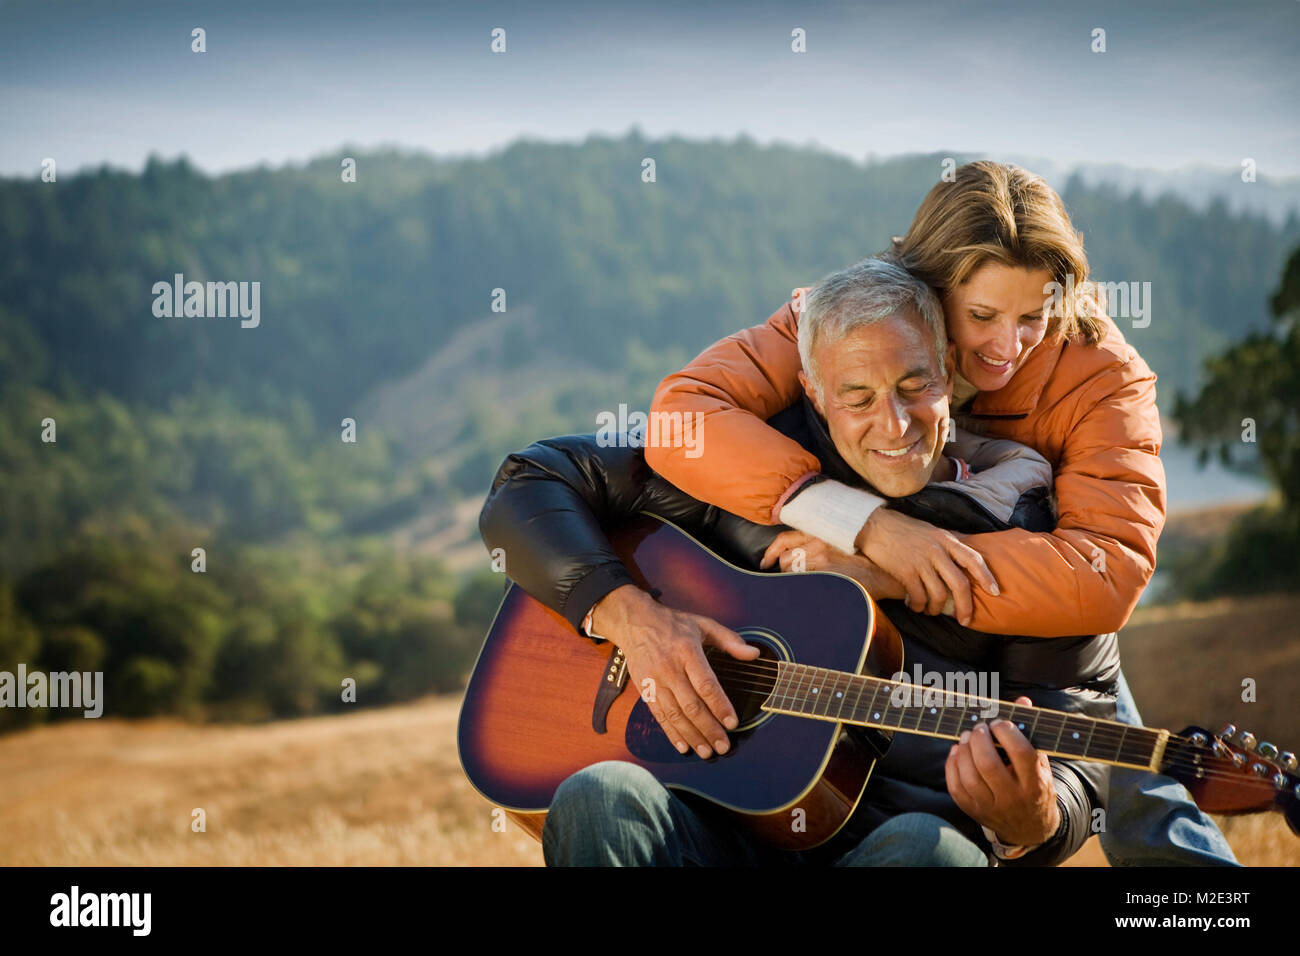 Woman hugging man playing guitar Stock Photo